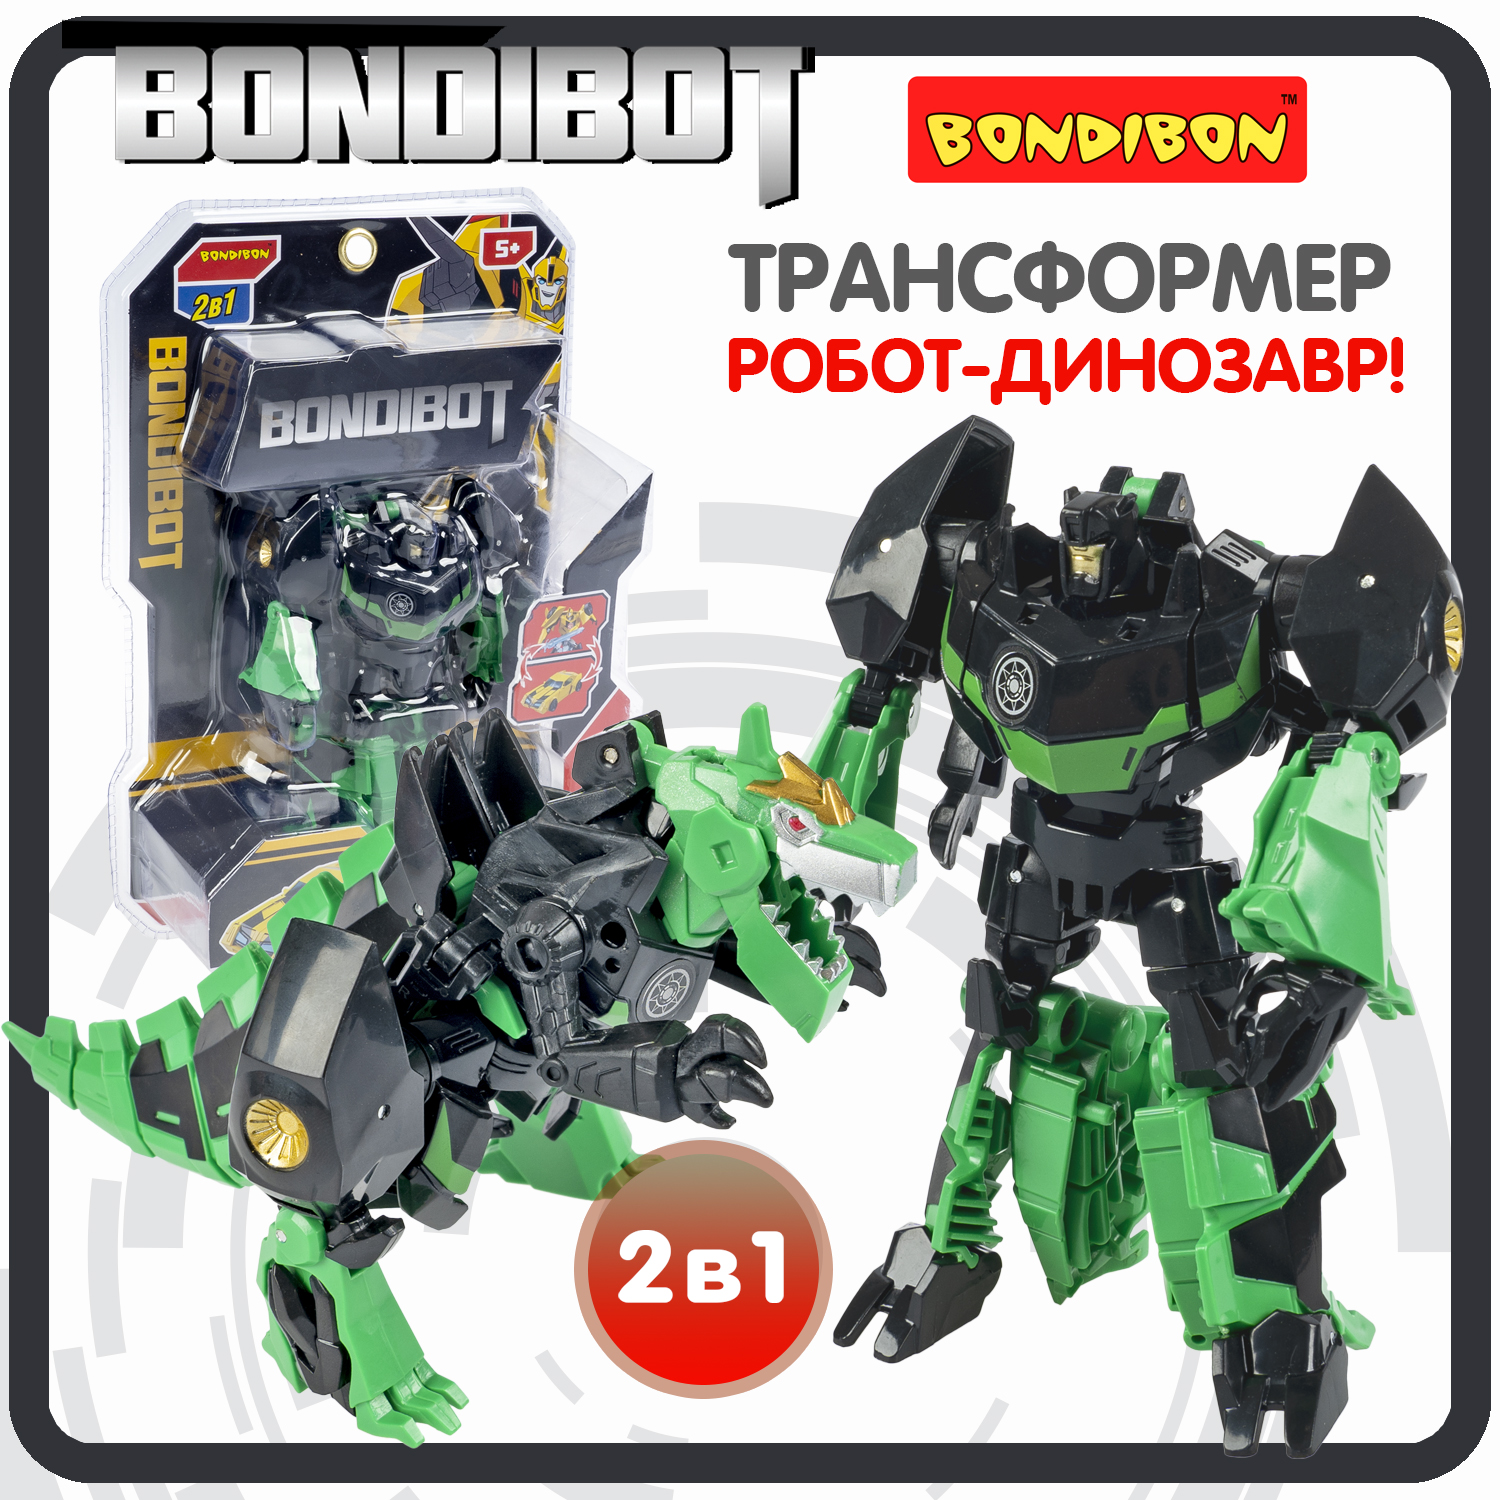 Трансформер 2в1 Bondibon, робот-динозавр, CRD 27х18,6х6 см, цвет зелёный, арт FB bondibon трансформер bondibot 2 в 1 робот с мечом динозавр тиранозавр